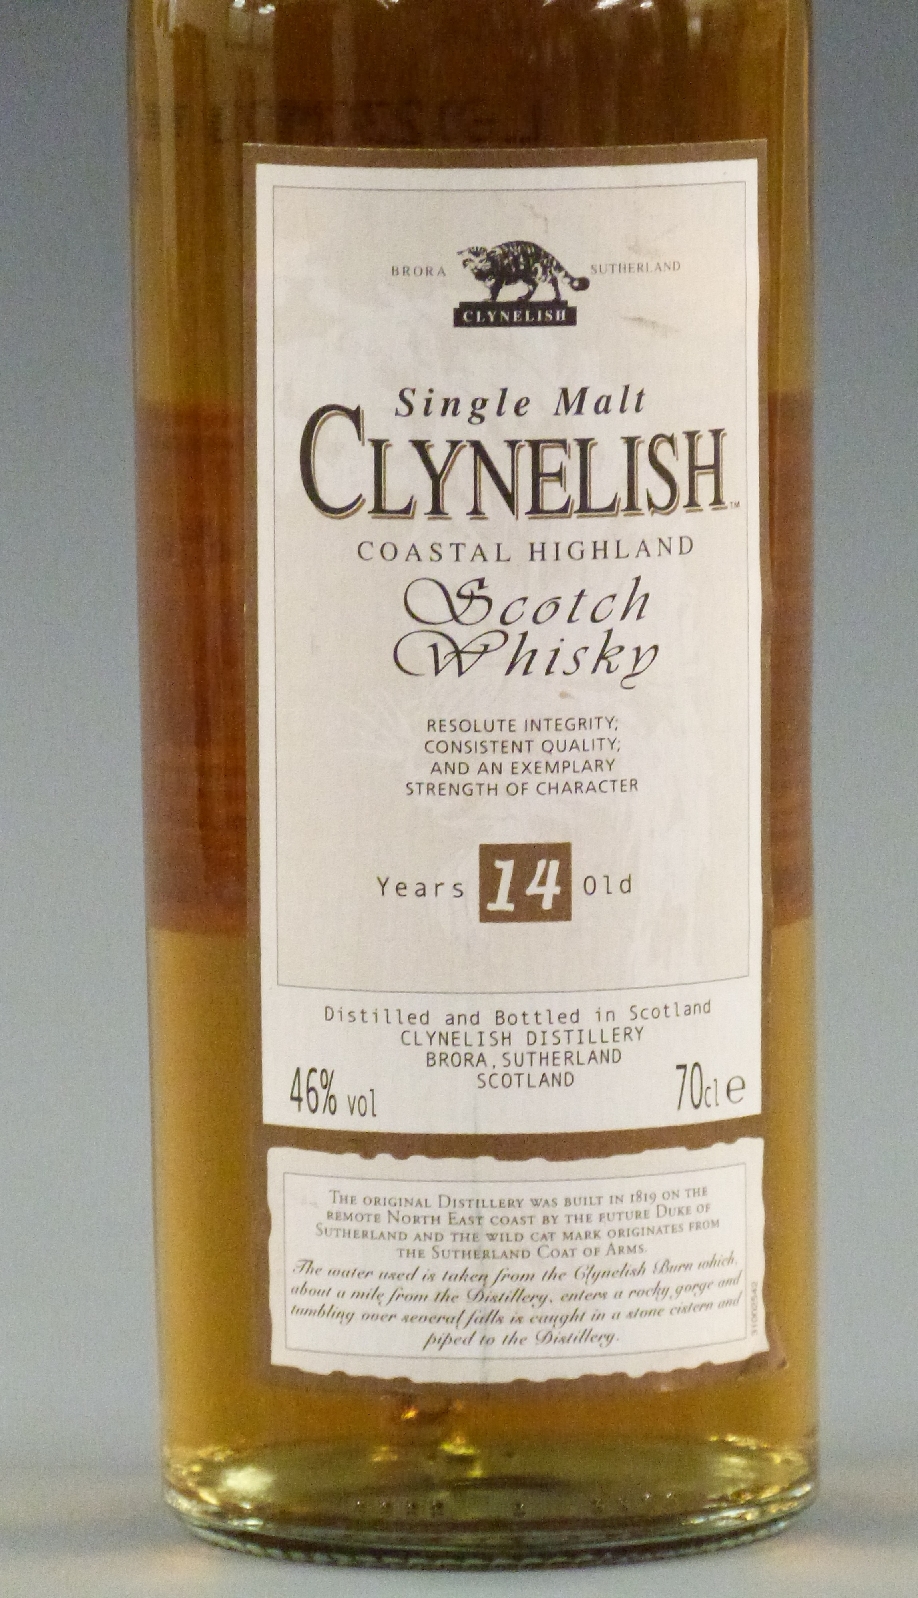 Clynelish Coastal Highland 14 year old Single Malt Scotch Whisky, 700ml, 46% vol. - Image 2 of 2